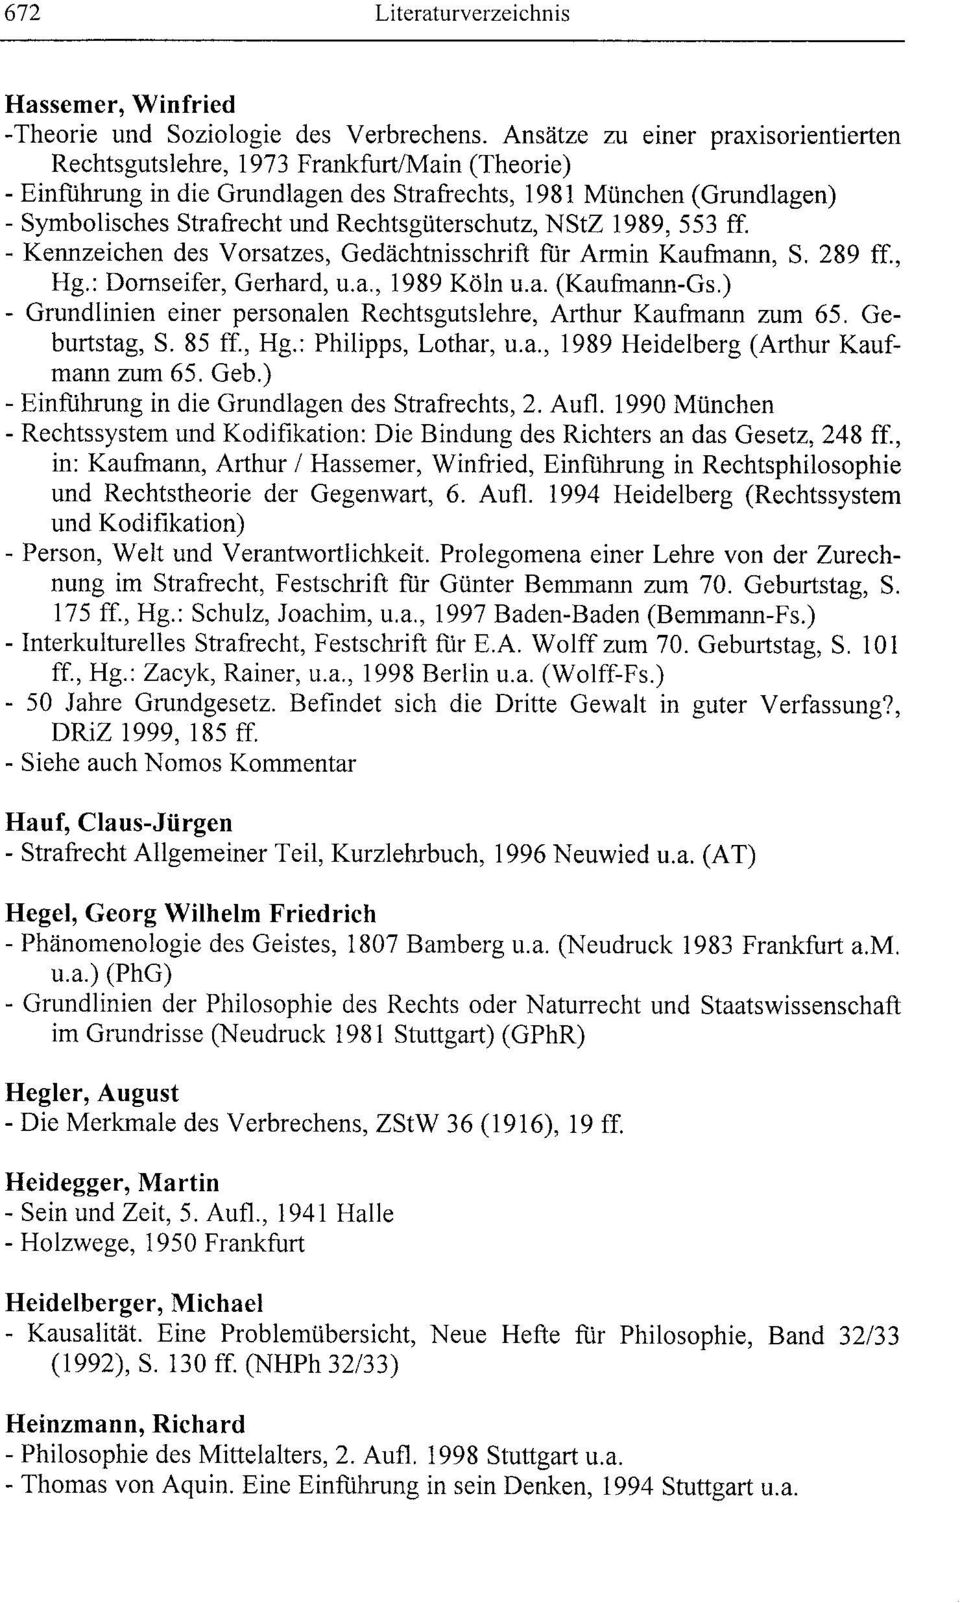 Rechtsgüterschutz, NStZ 1989,553 ff. - Kennzeichen des Vorsatzes, Gedächtnisschrift fur Armin Kaufmann, S. 289 ff., Hg.: Domseifer, Gerhard, u.a., 1989 Köln u.a. (Kaufmann-Gs.